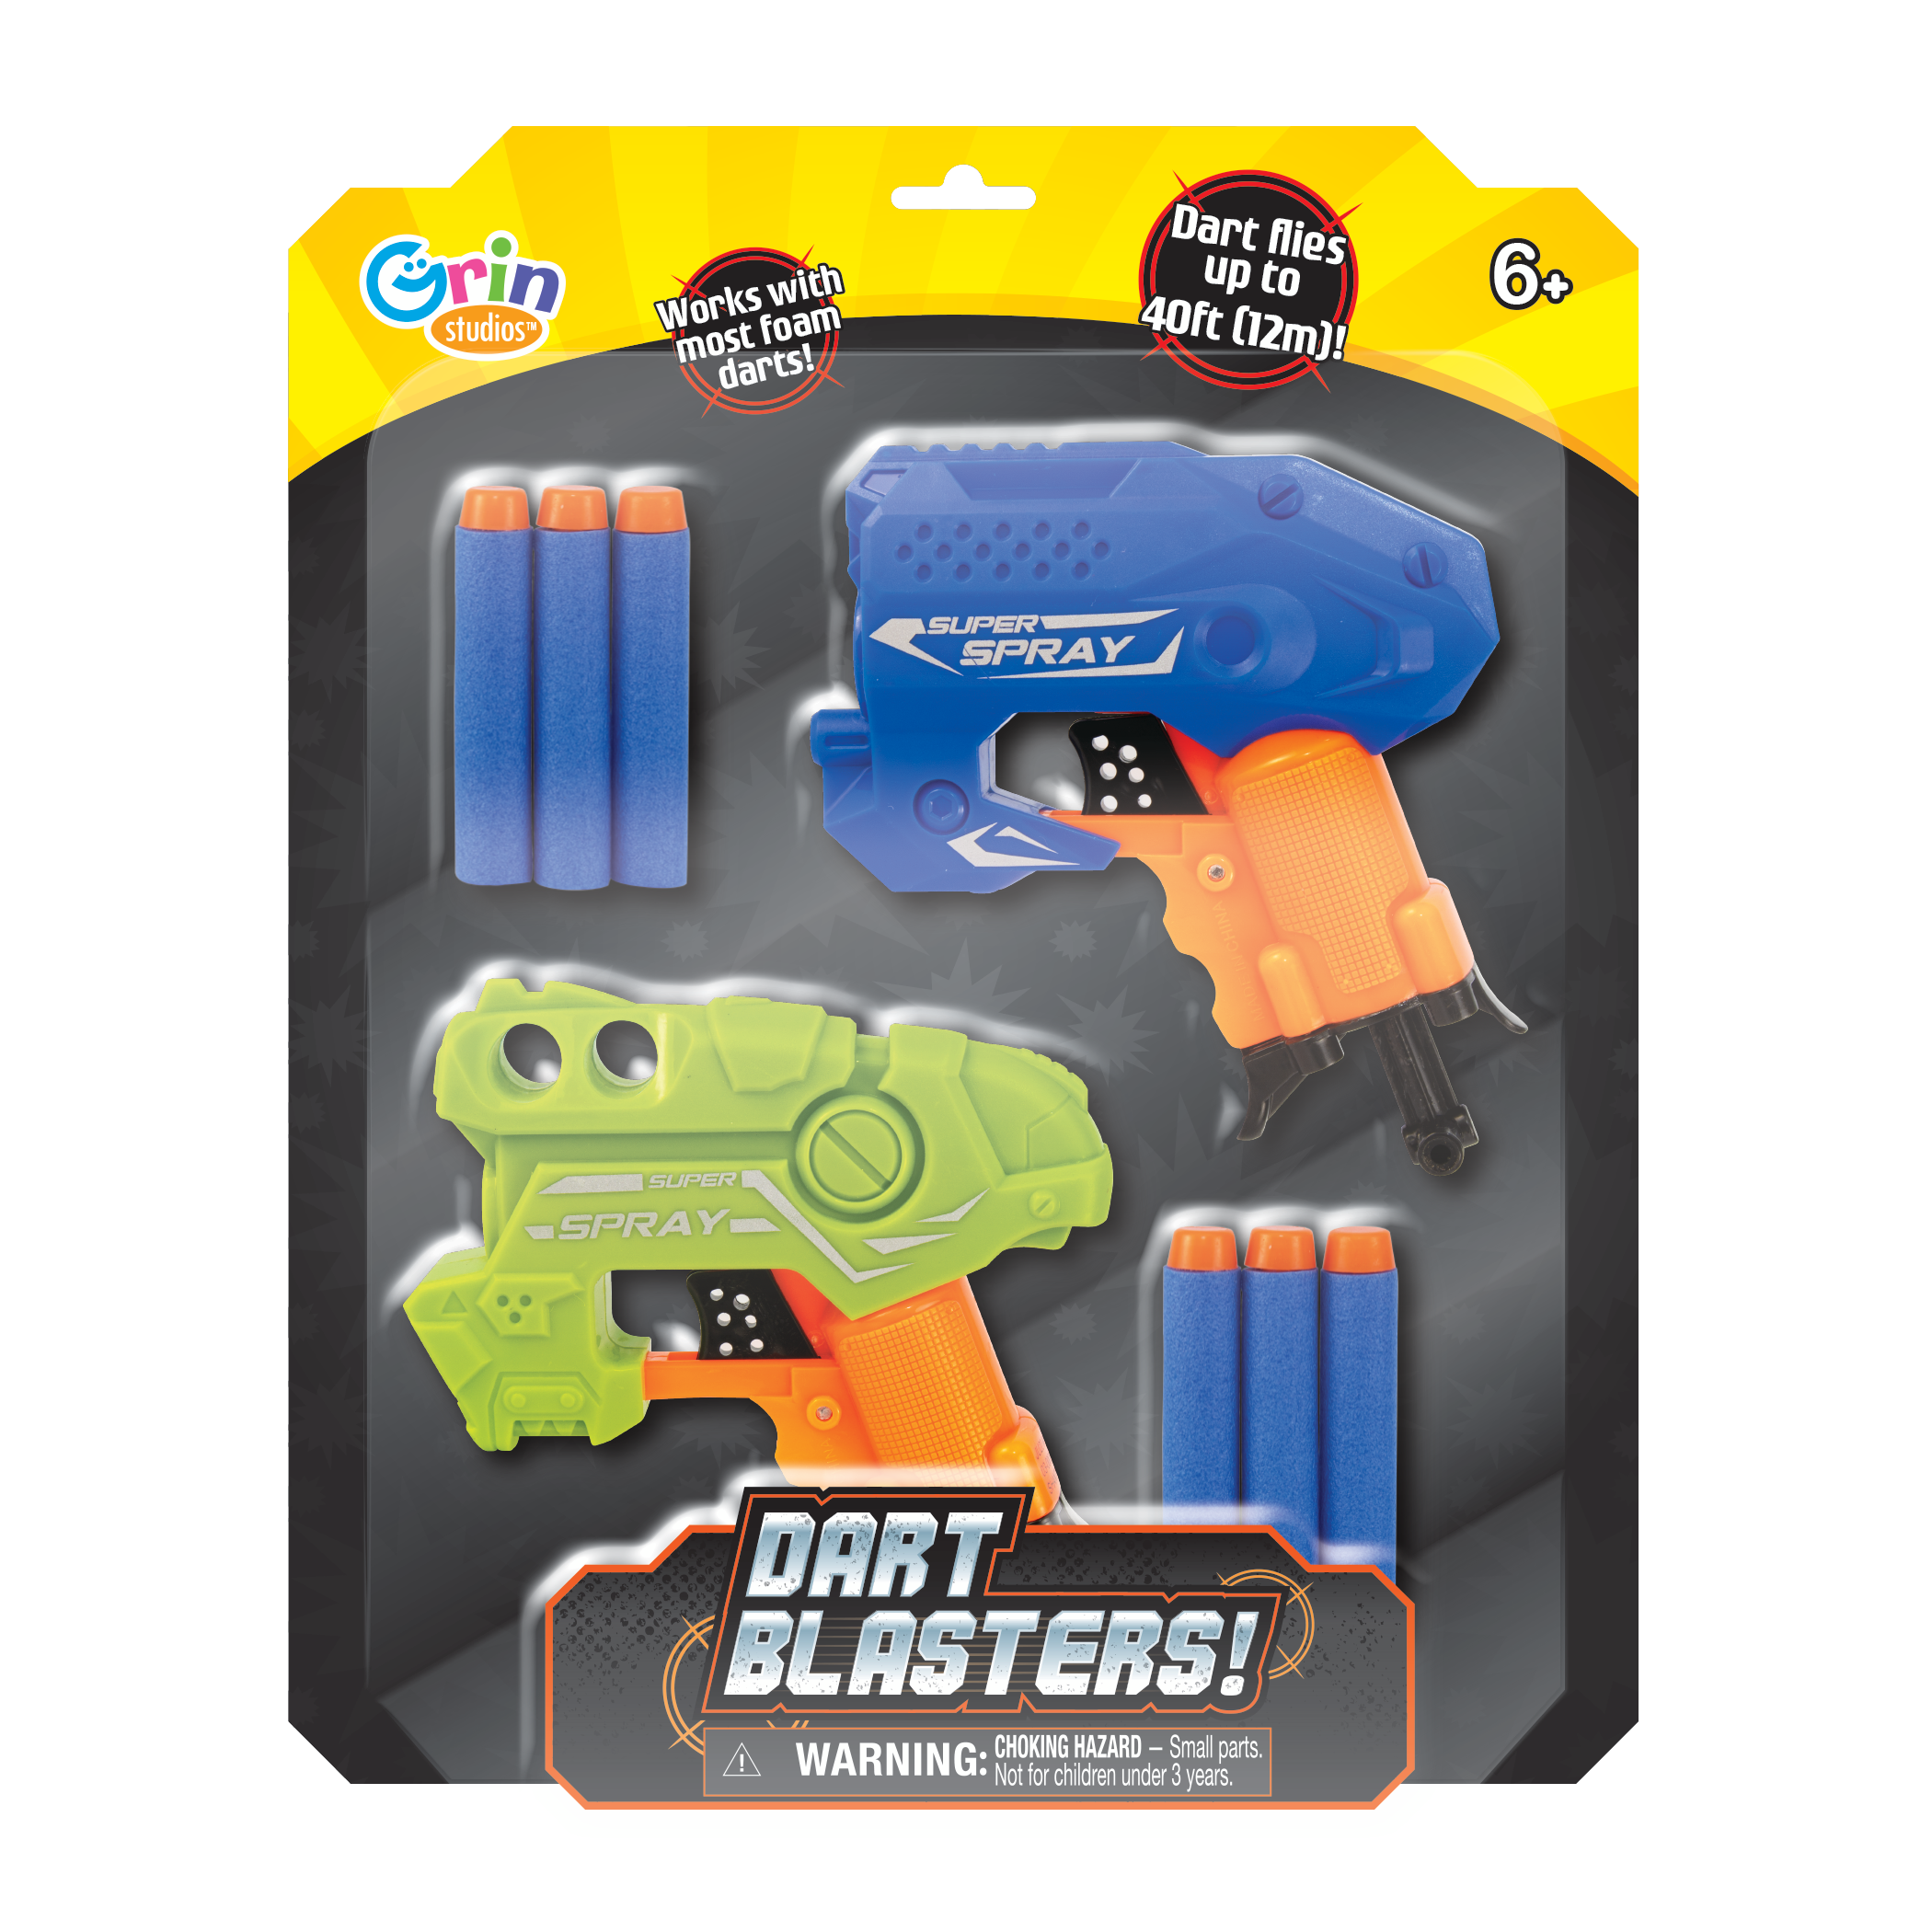 Dart Blasters! - Grin Studios